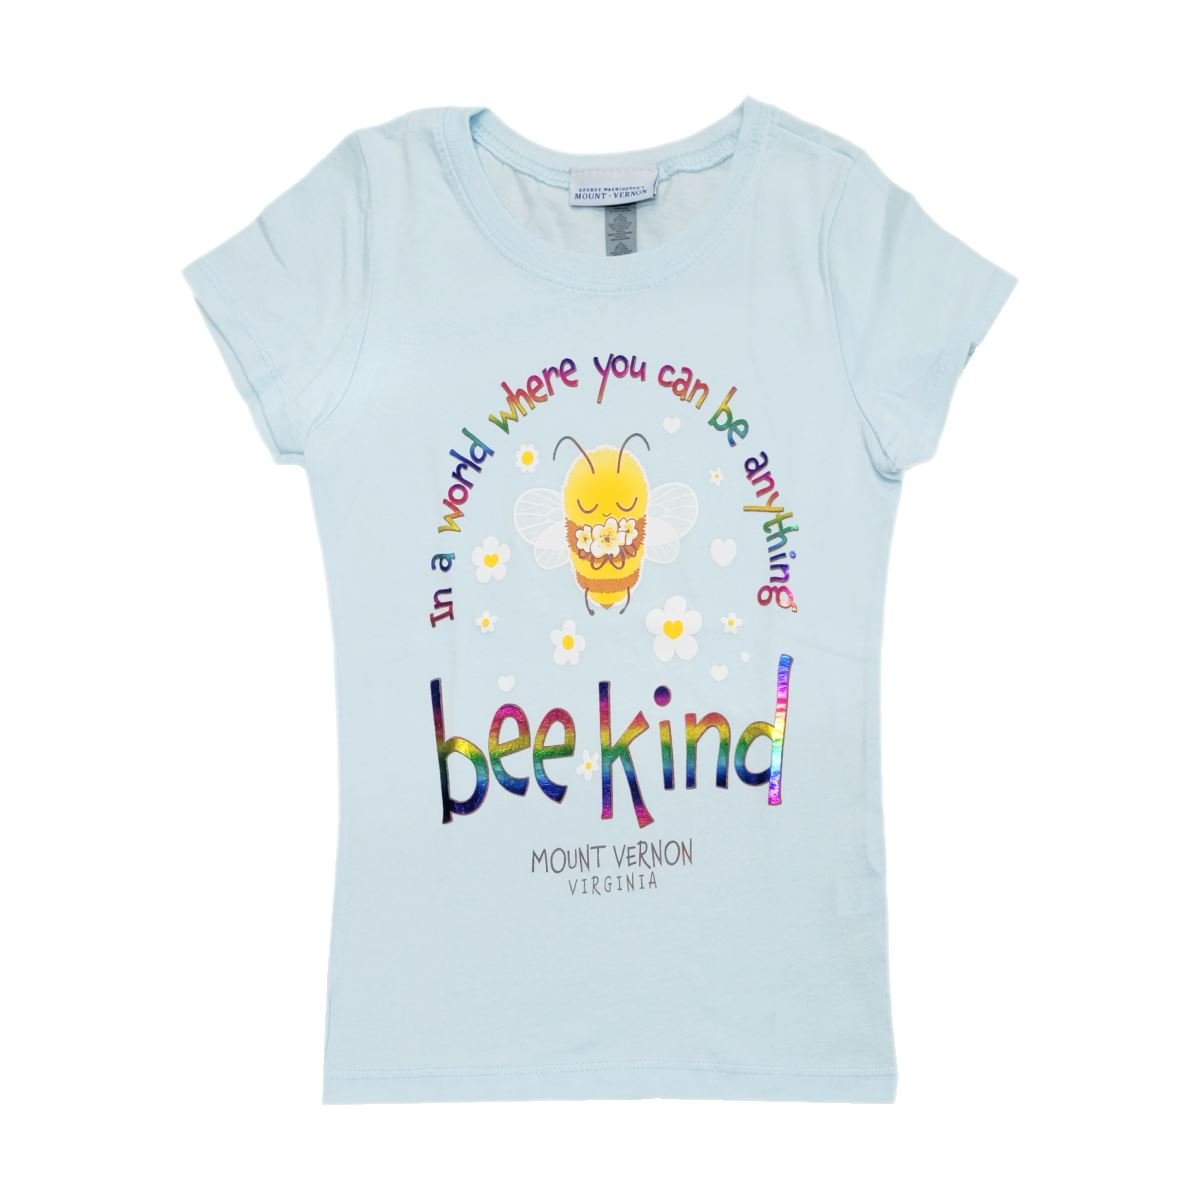 "Bee Kind" Children's T-Shirt - JK2 APPAREL/SELM LLC - The Shops at Mount Vernon